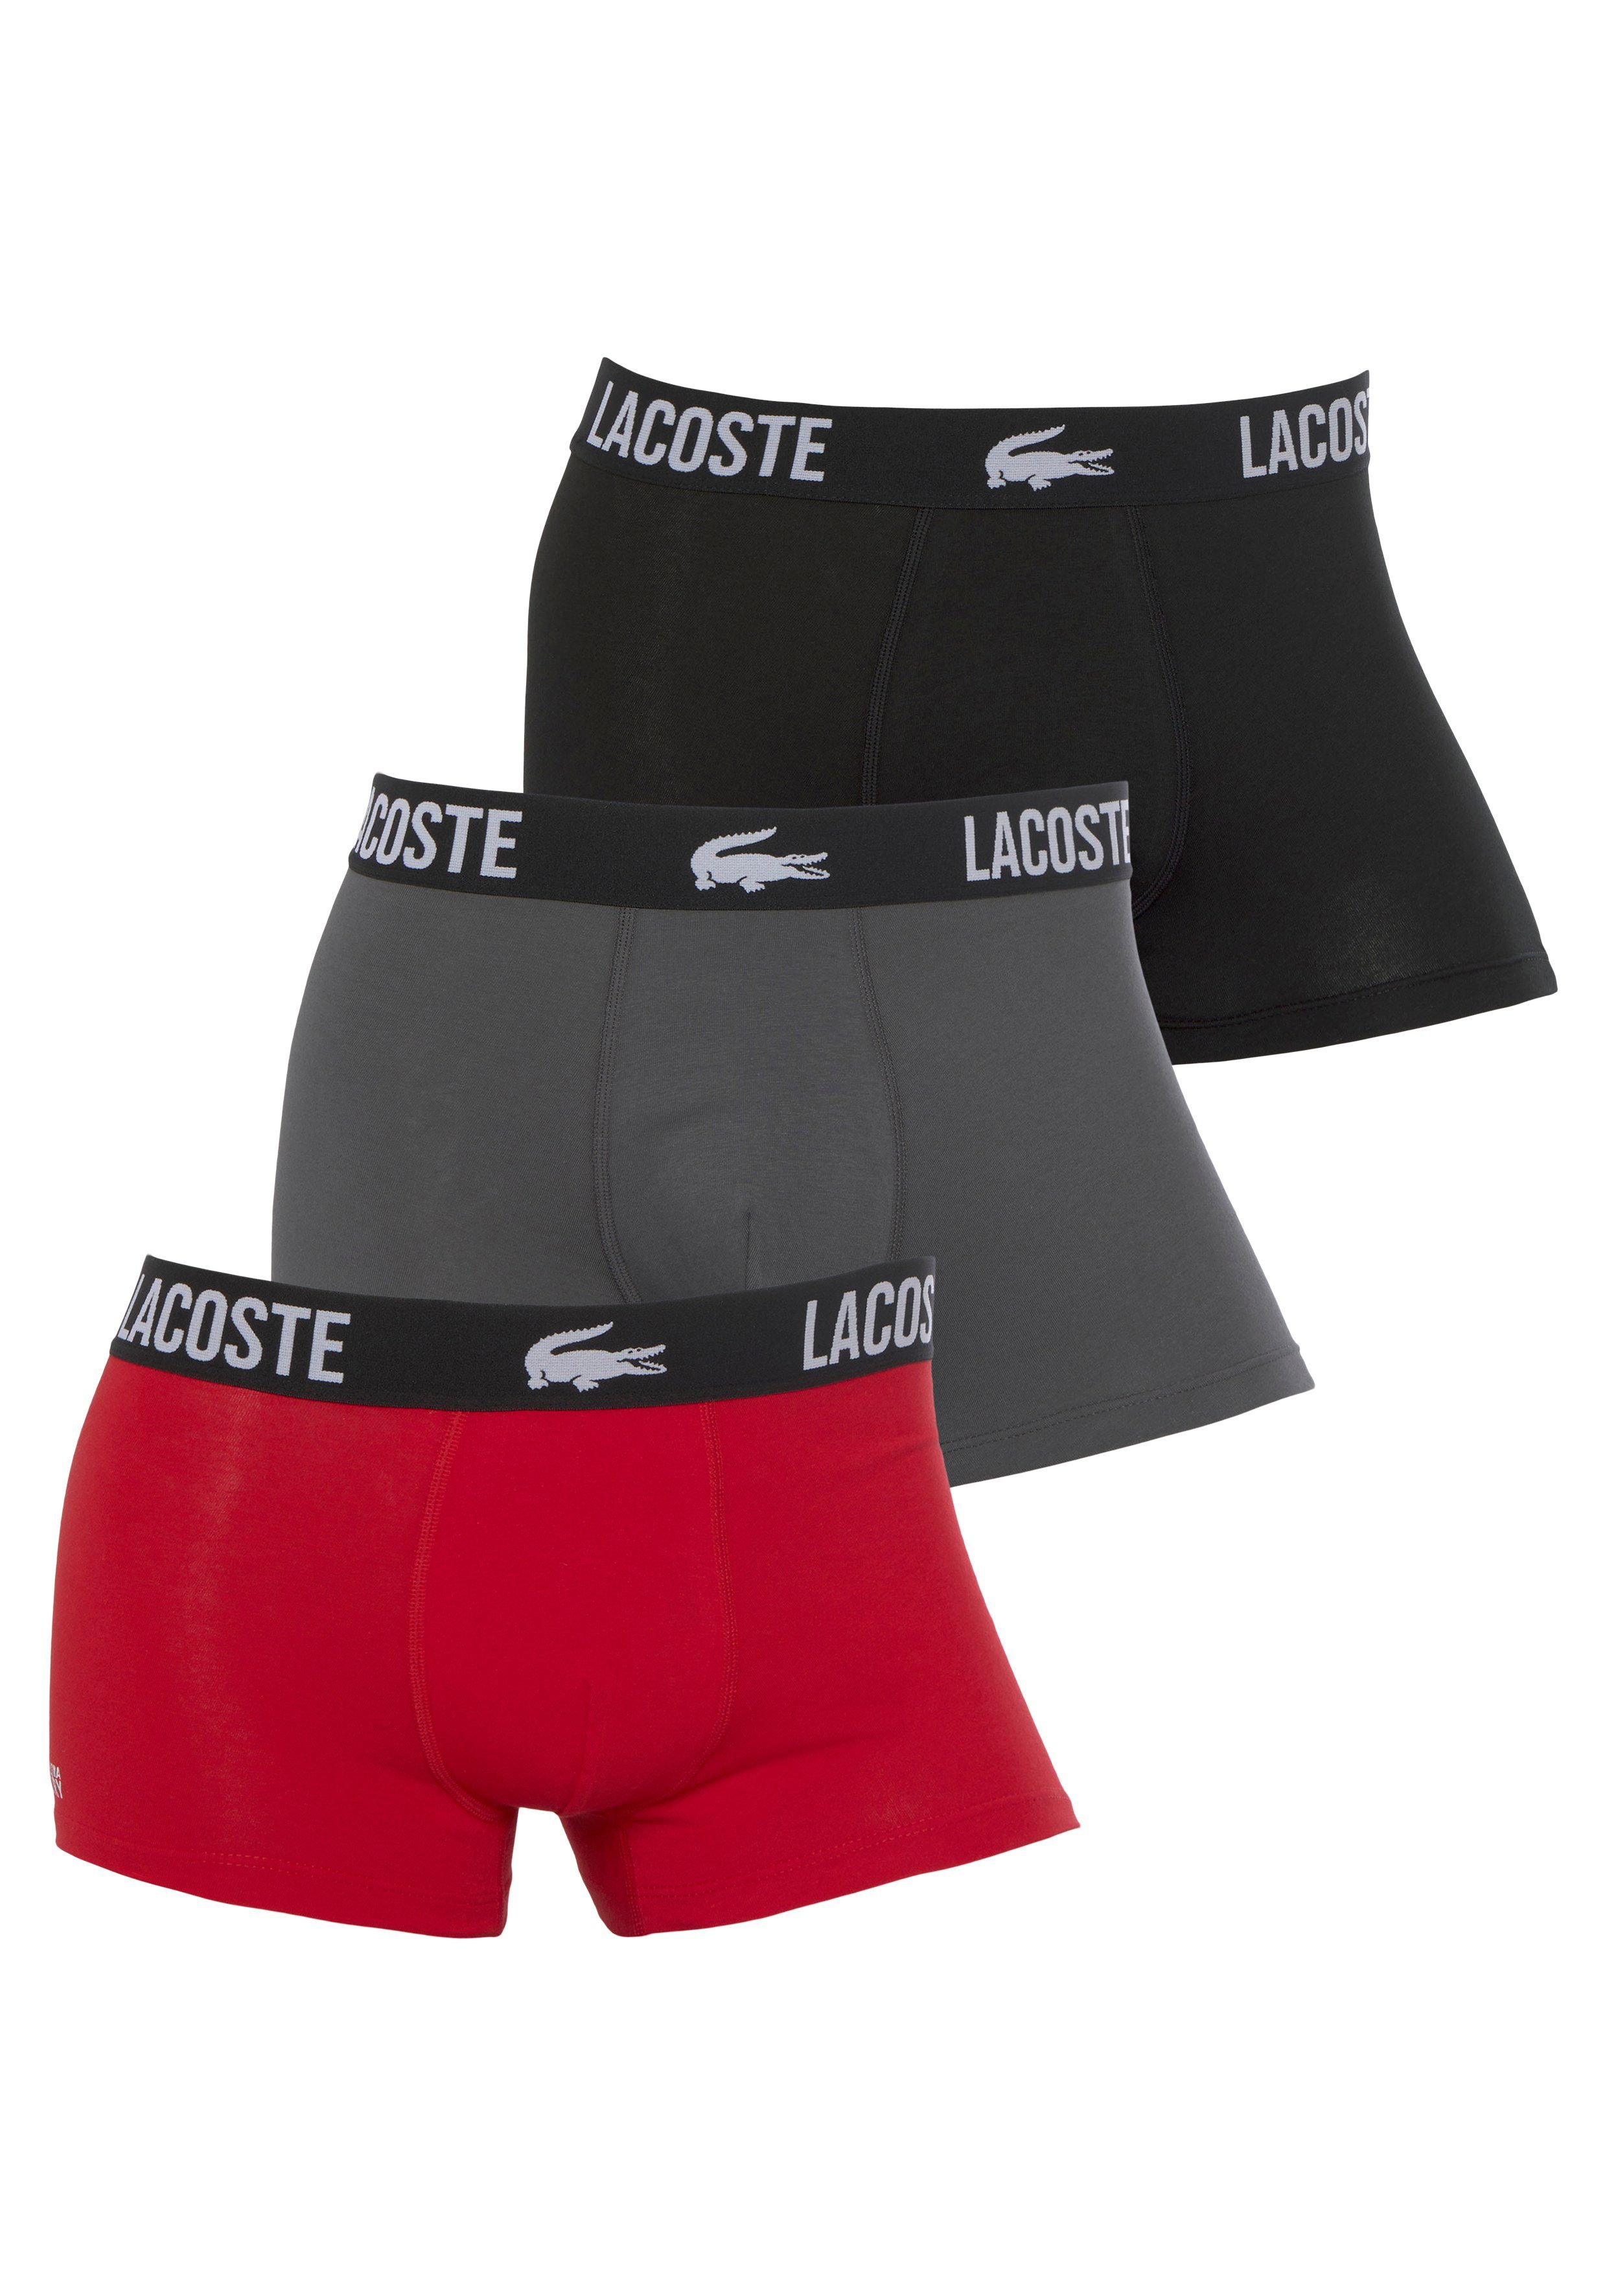 aus Lacoste Herren Trunk im Boxershorts 3er-Pack) grau rot Premium Stretch-Baumwolle blau eng 3er-Pack (Packung, Lacoste